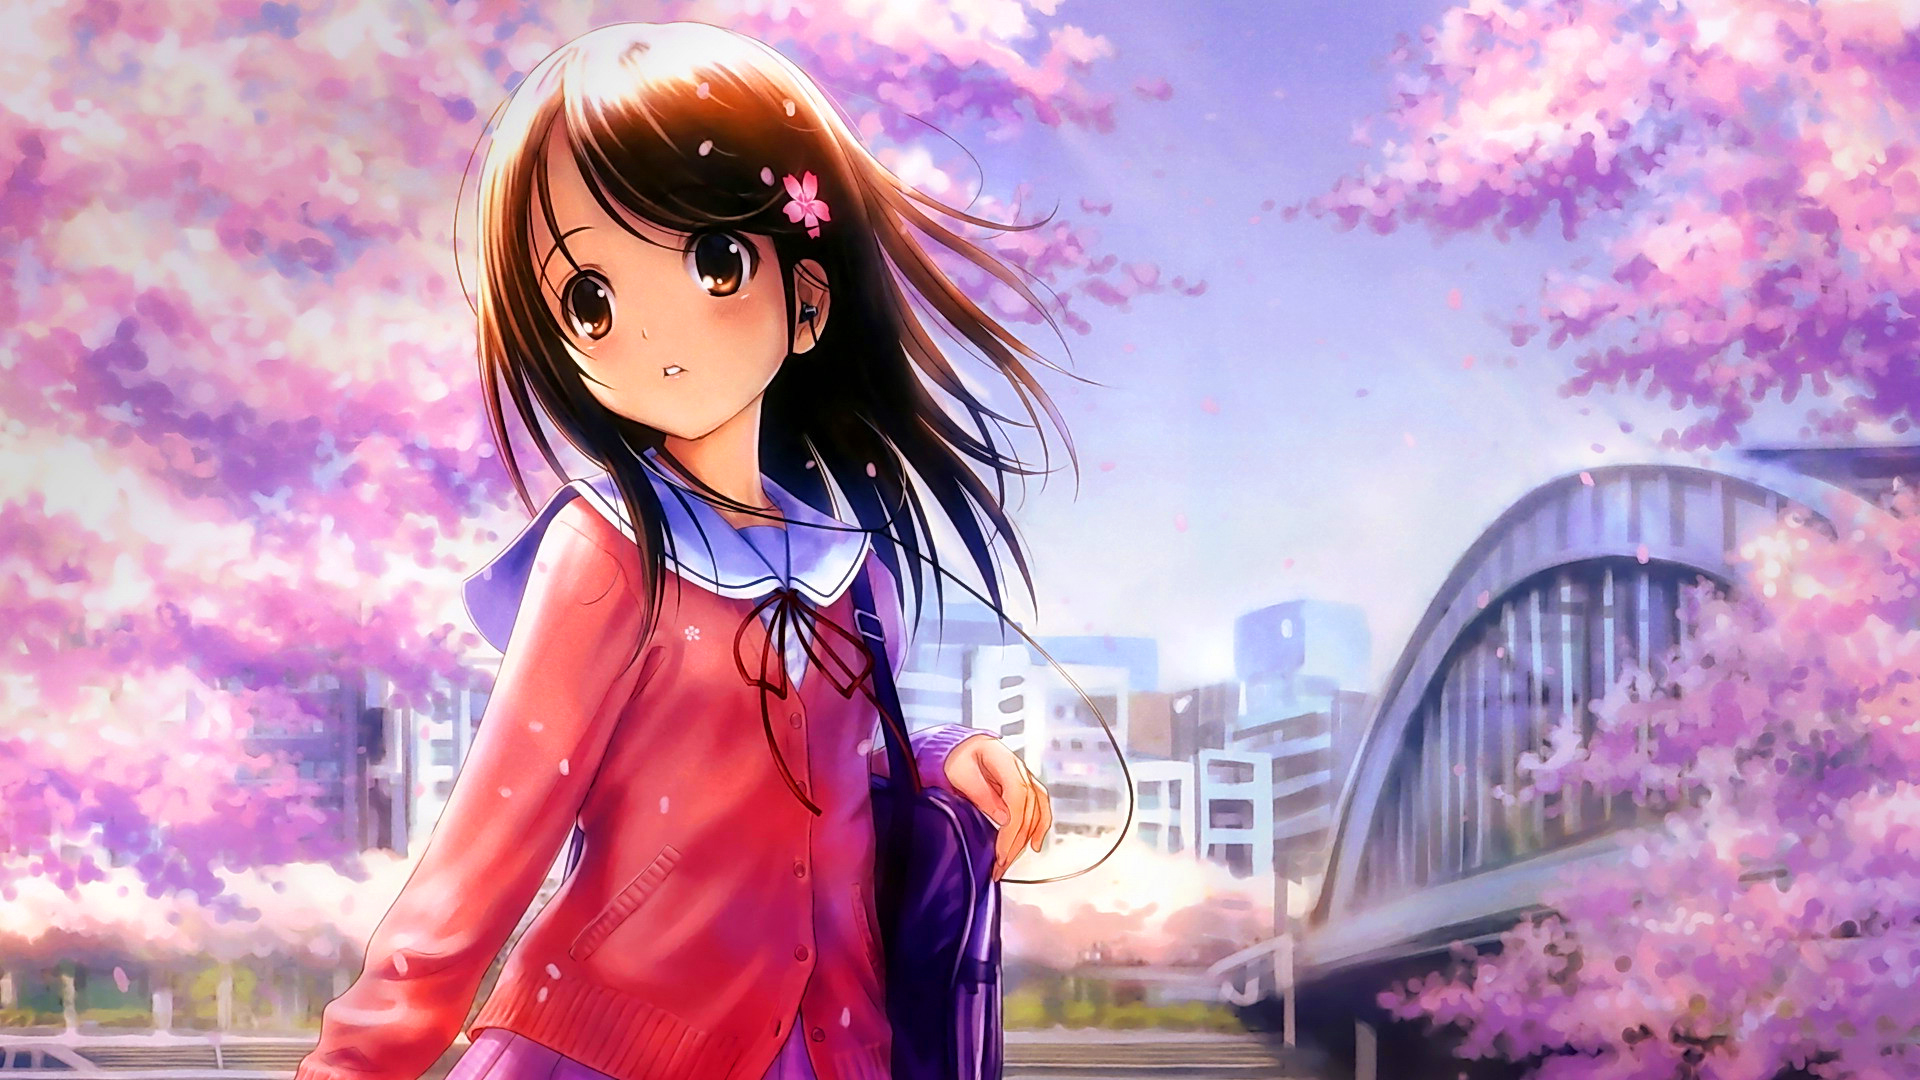 Anime Girl With Headphones, HD Anime, 4k Wallpaper, Image